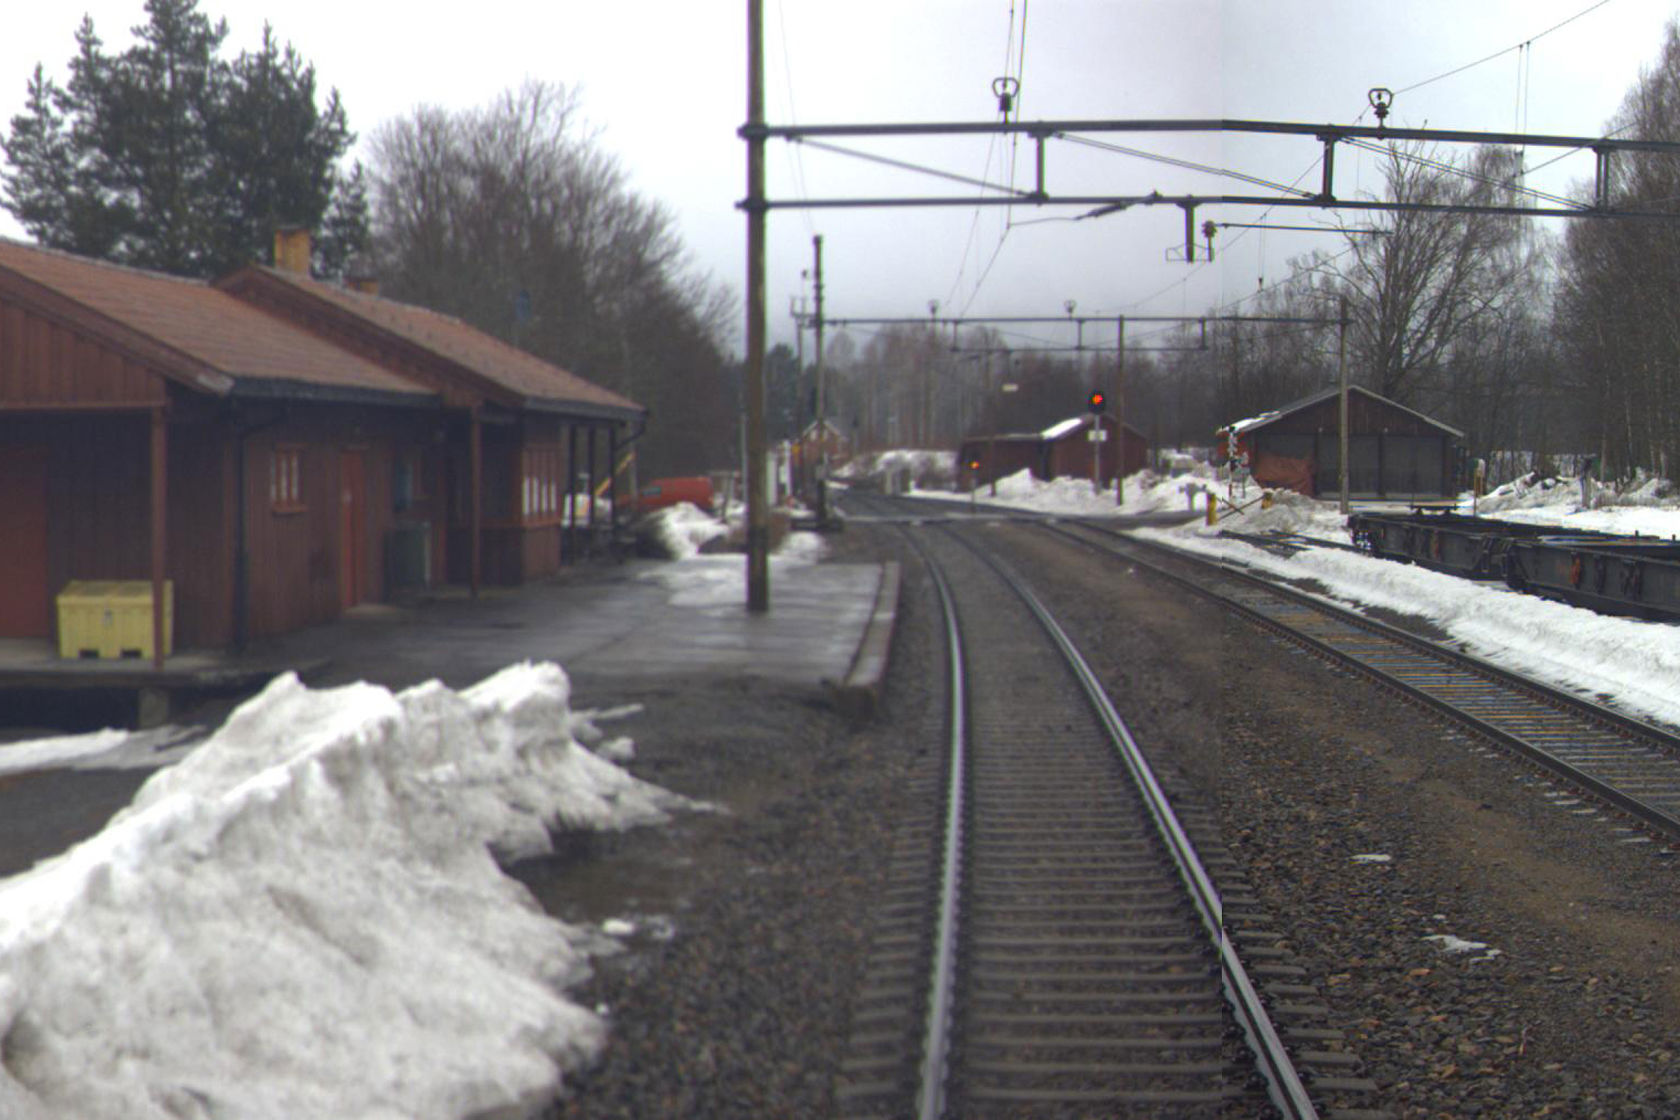 Tracks and station building at Disenå station